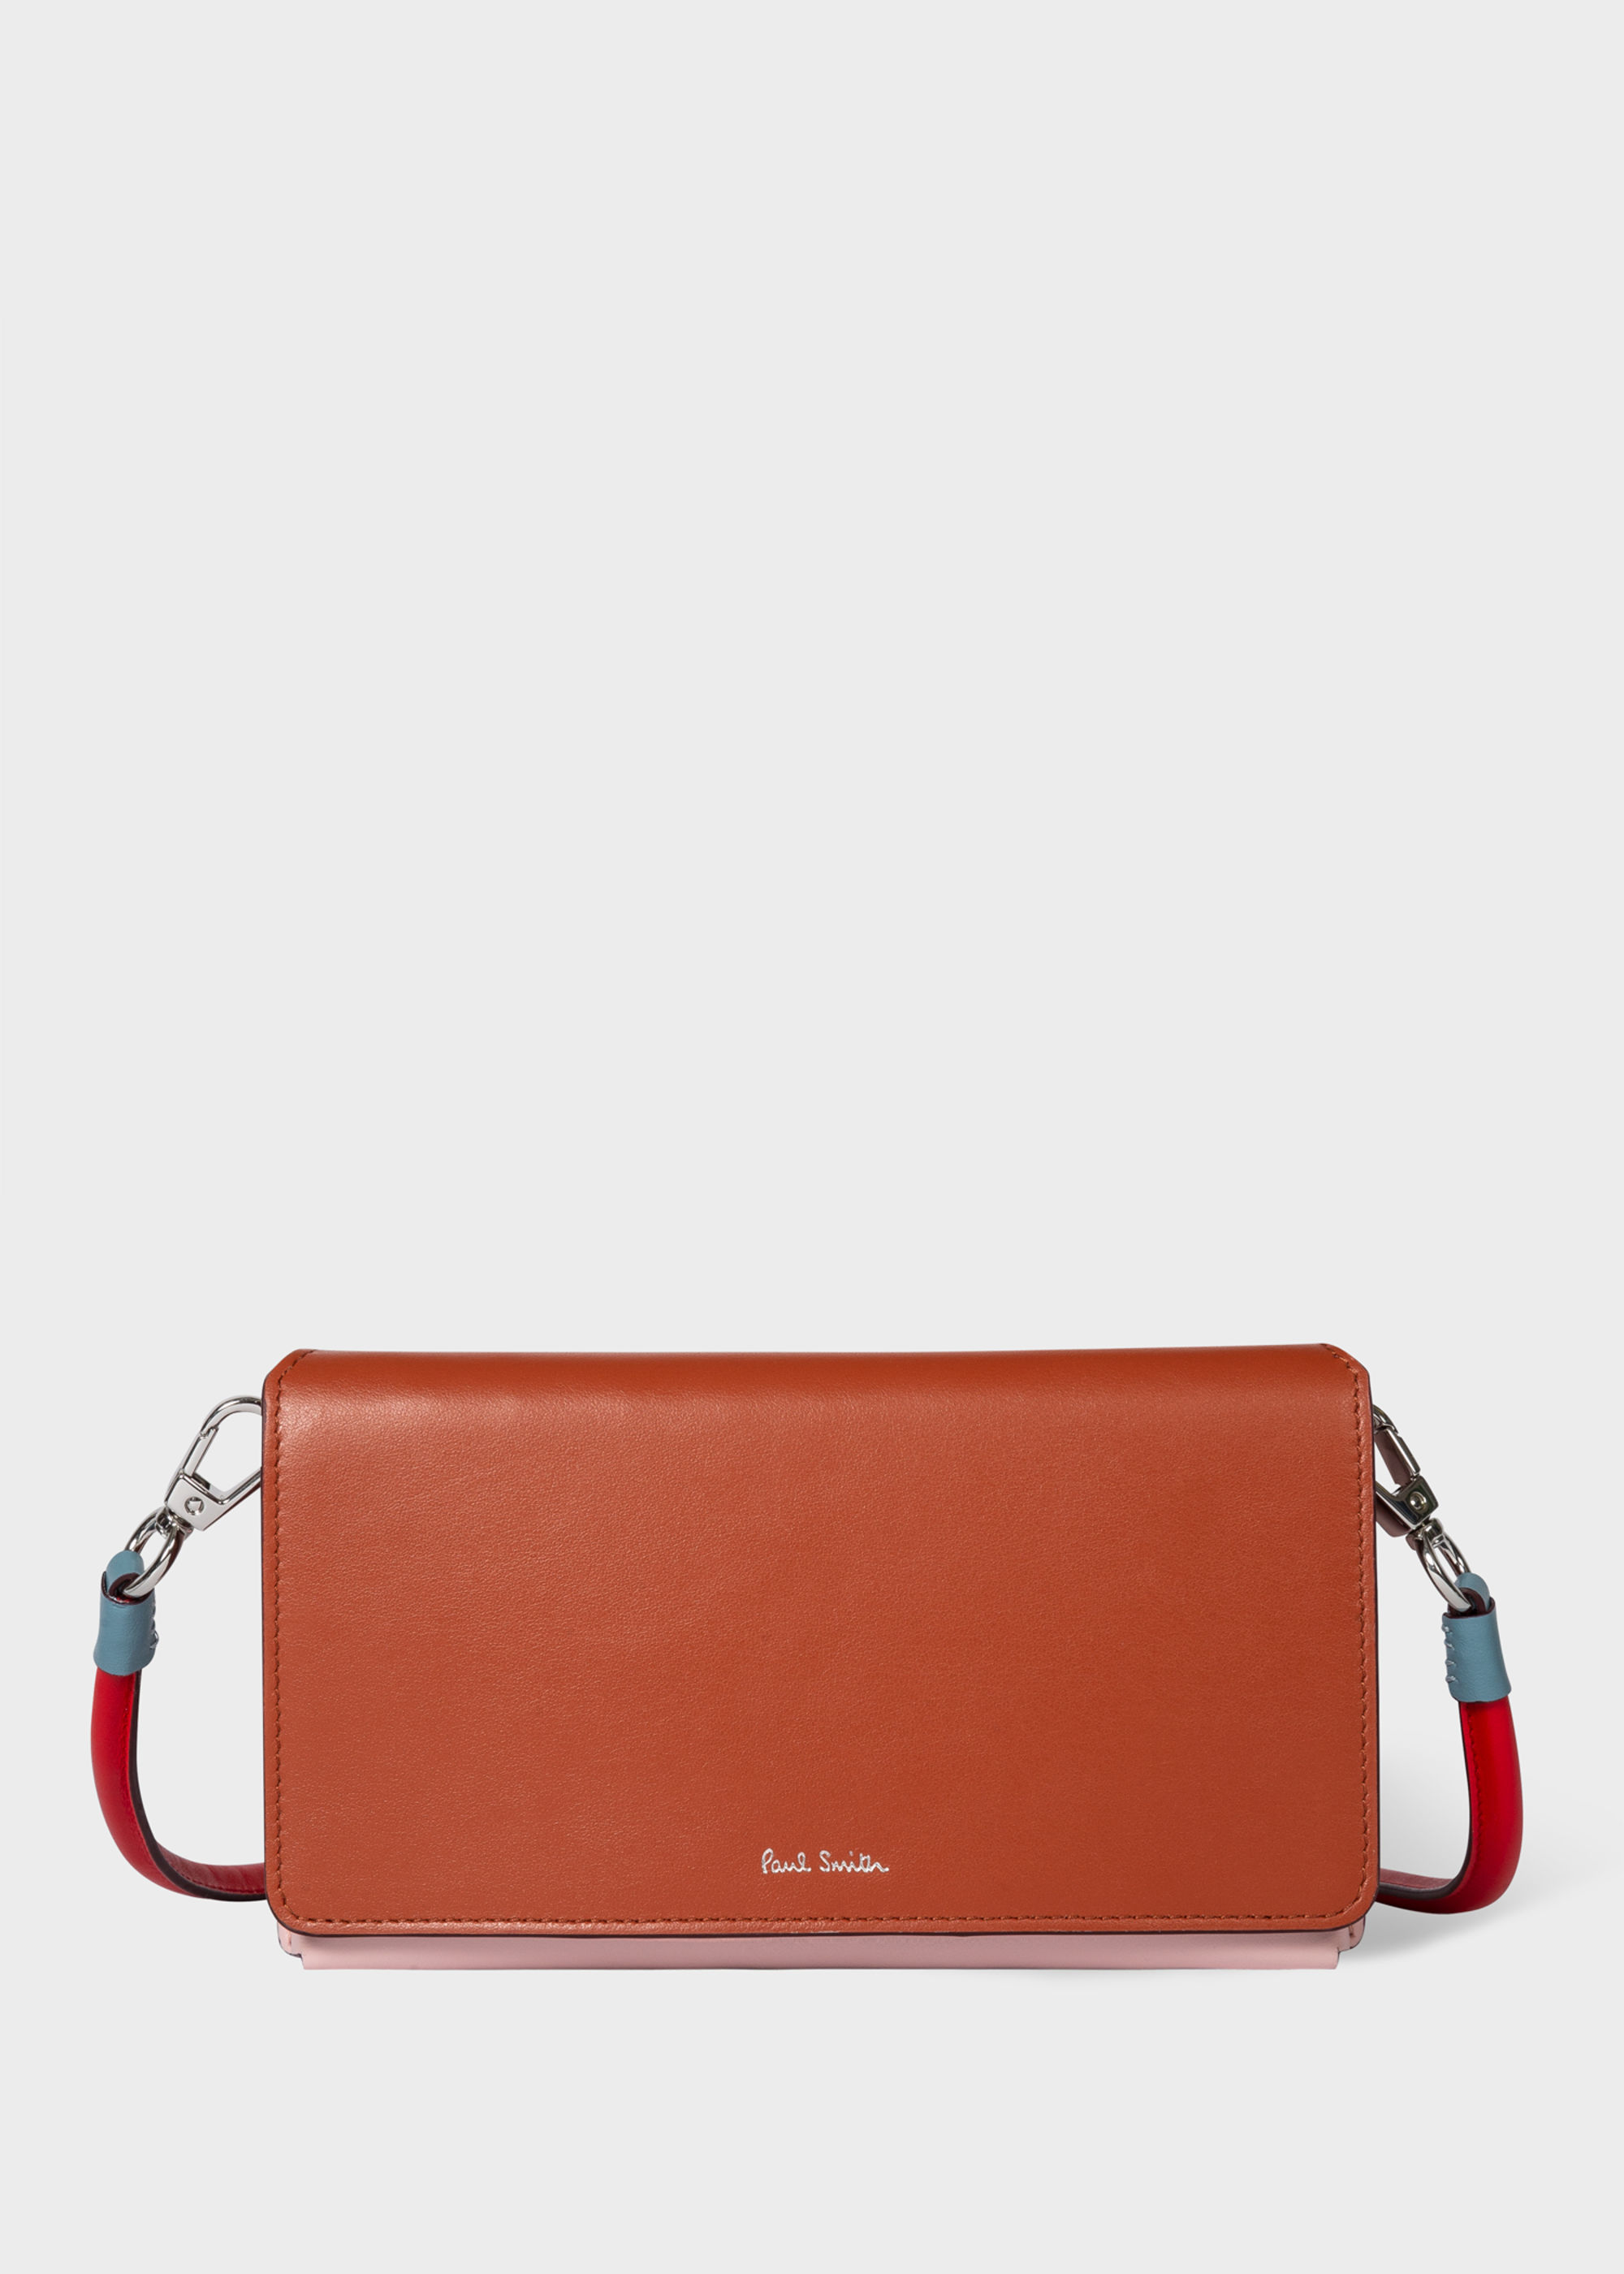 Paul Smith Tan Multi Colour Leather Phone Holder Bag